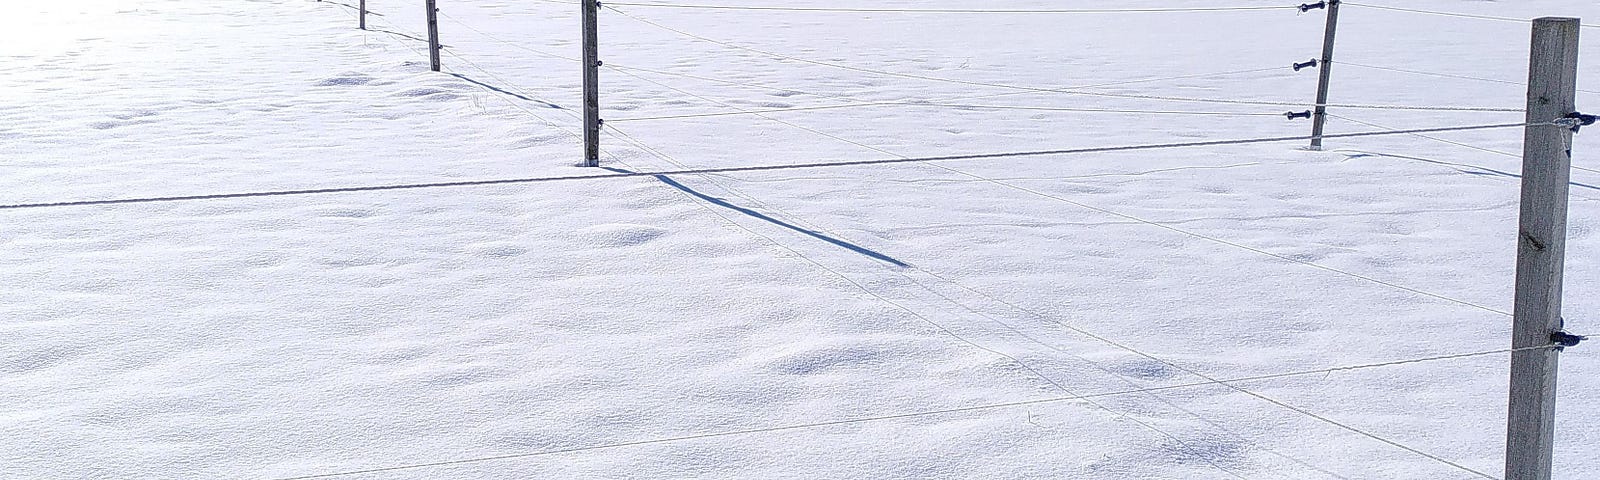 Fence posts criss-cross a snowy landscape